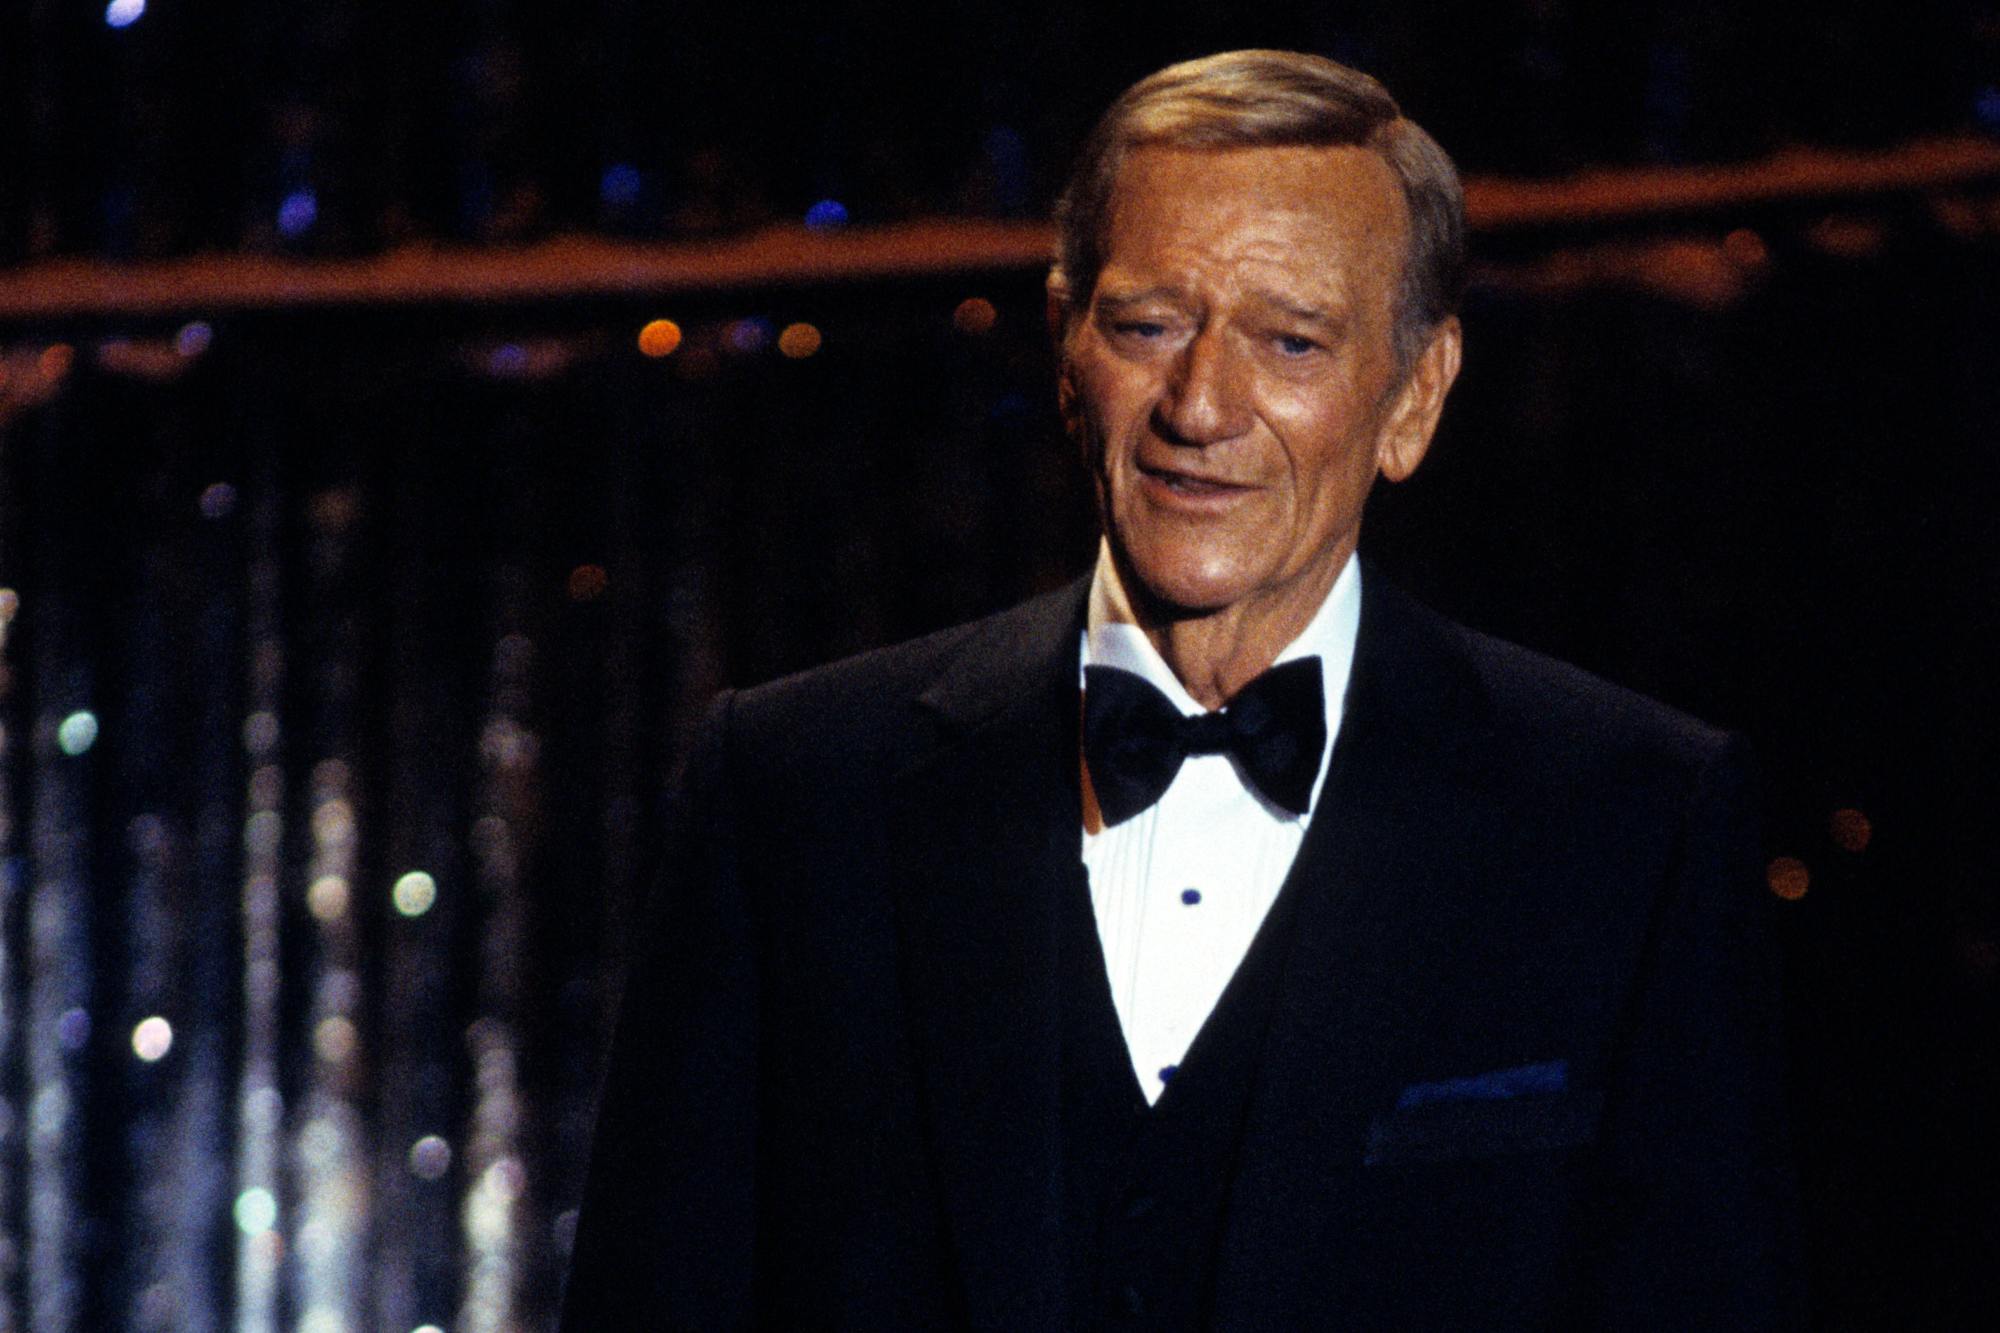 John Wayne at the 1979 Oscars, where he got a hug from Sammy Davis Jr. He's wearing a tux